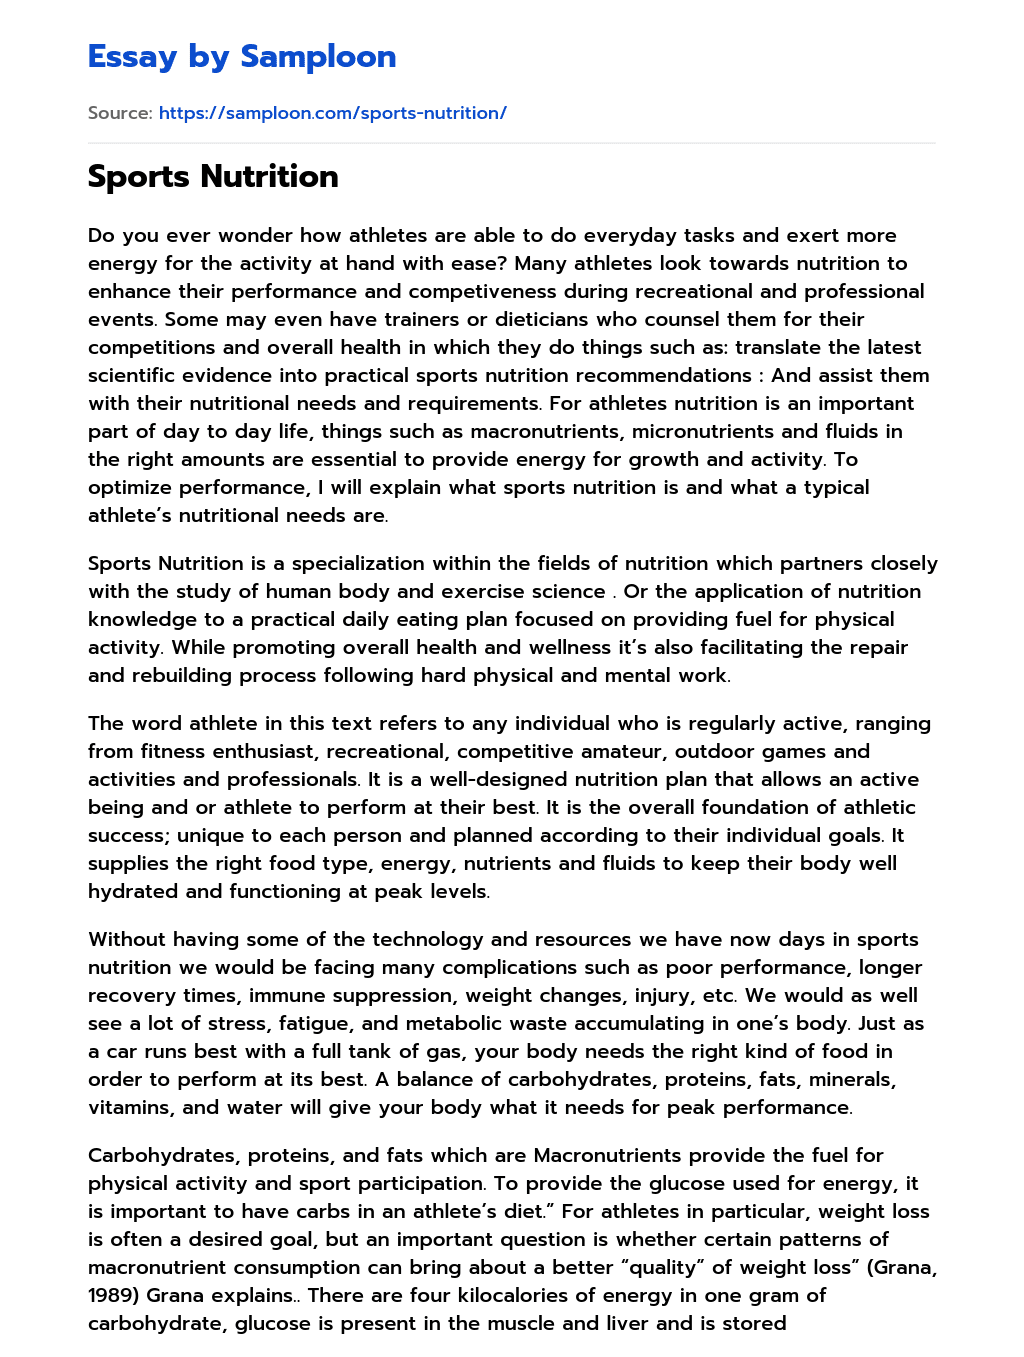 dissertation ideas for sports nutrition